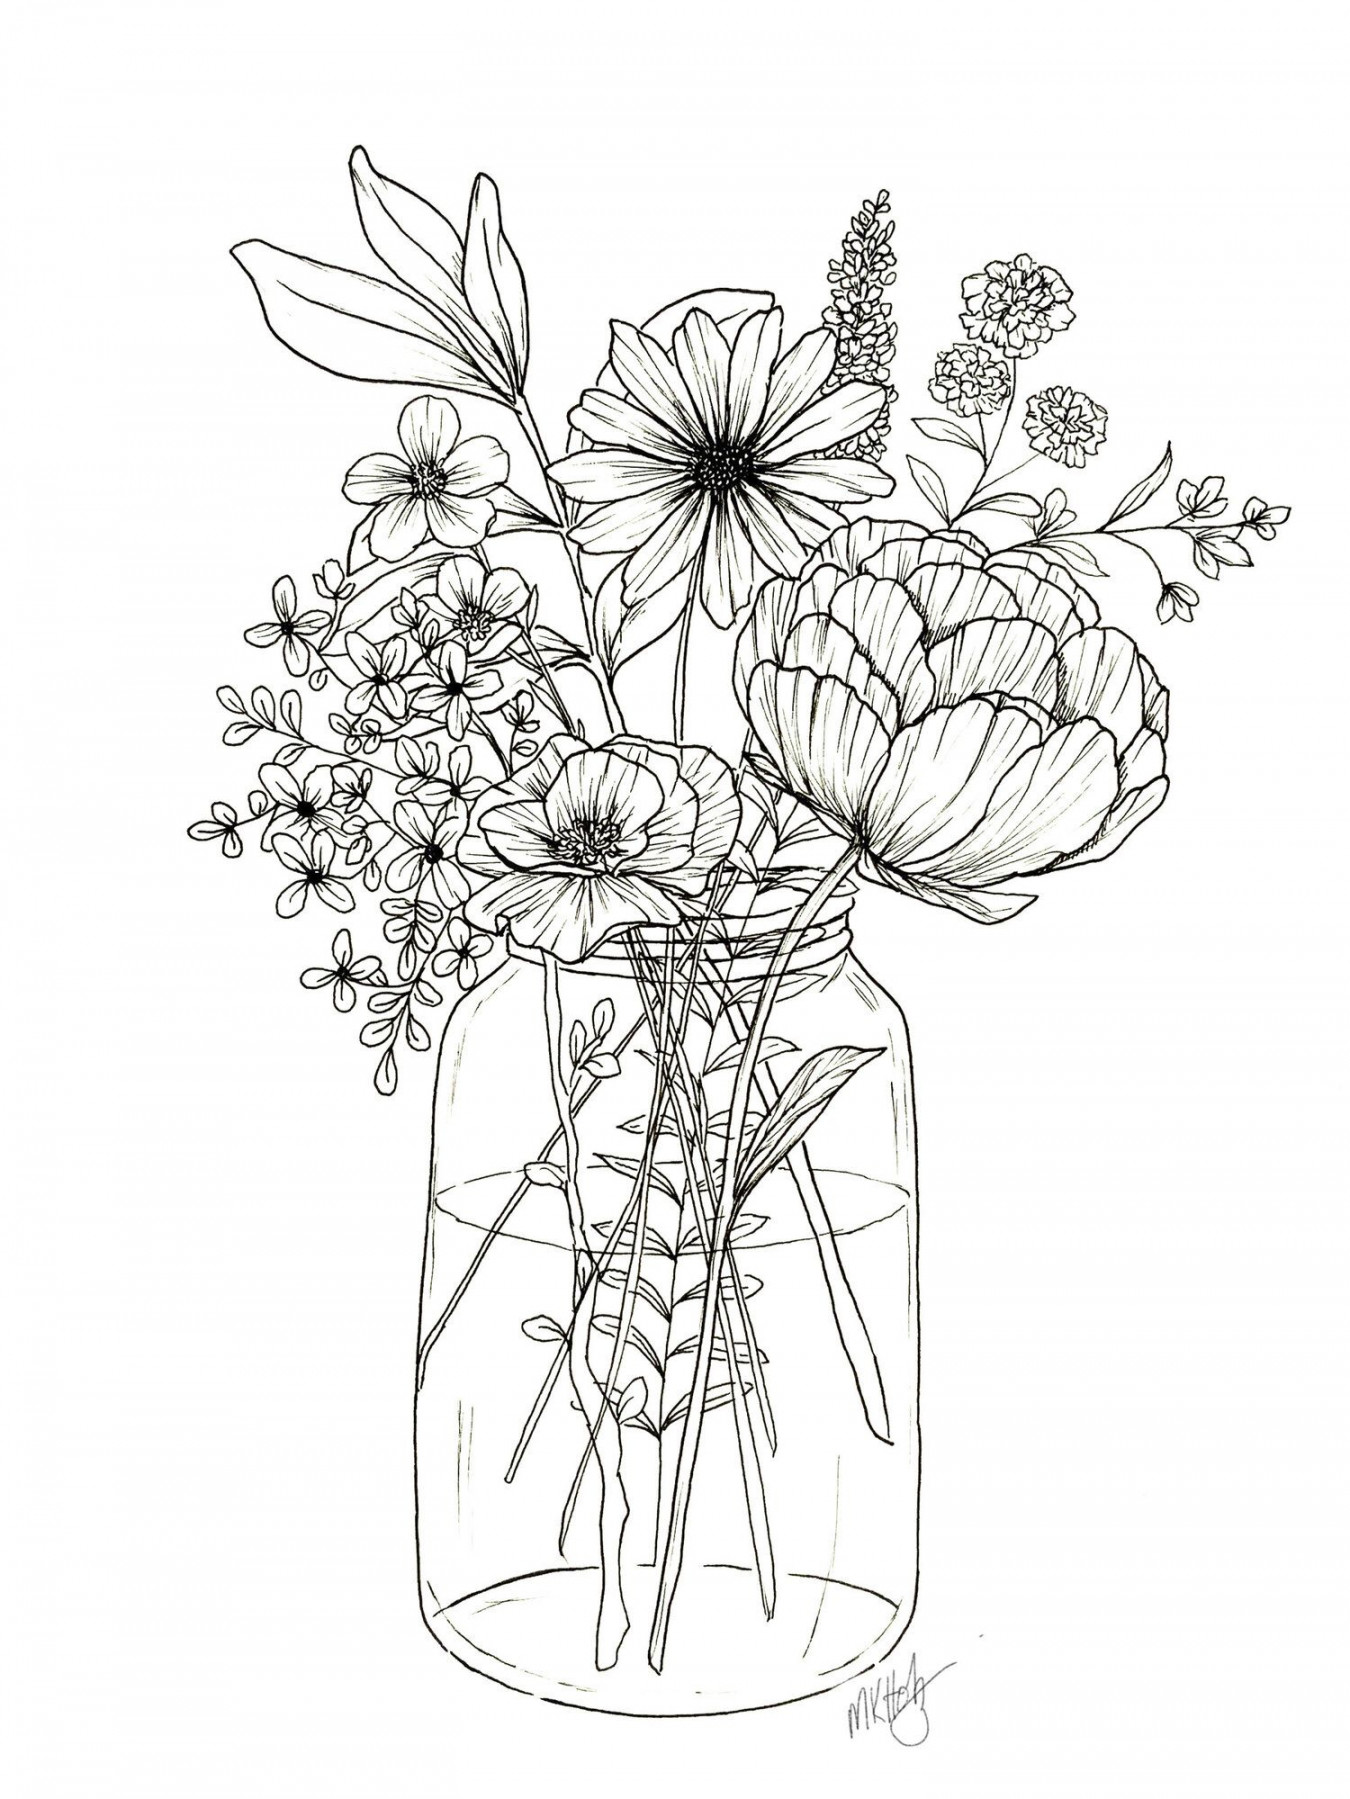 Floral Arrangement Coloring Page  Flower art drawing, Flower line